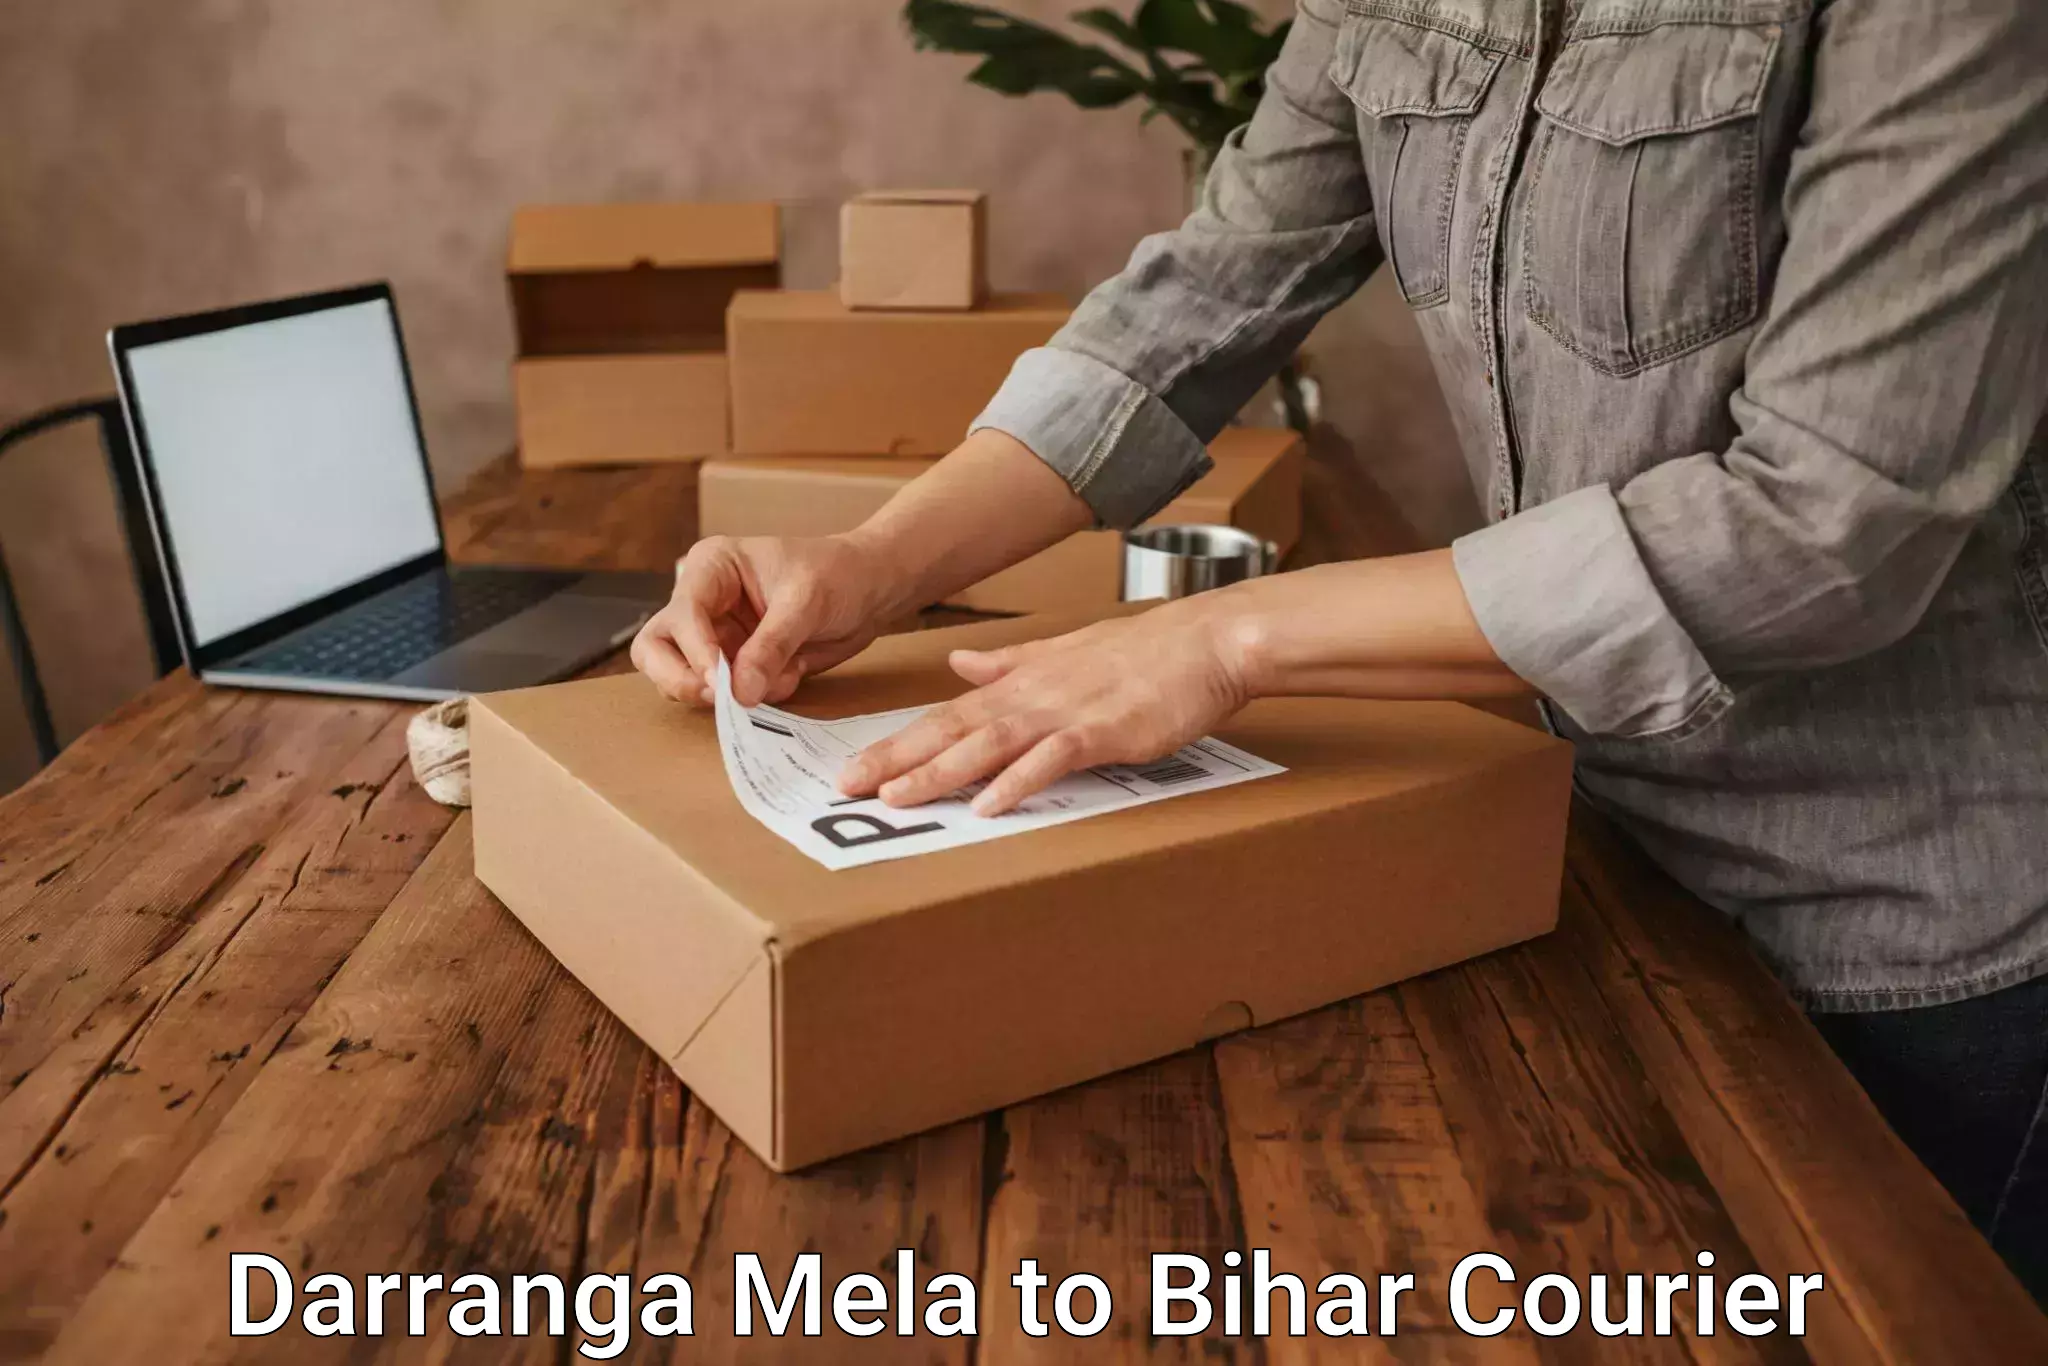 State-of-the-art courier technology Darranga Mela to Bakhtiarpur